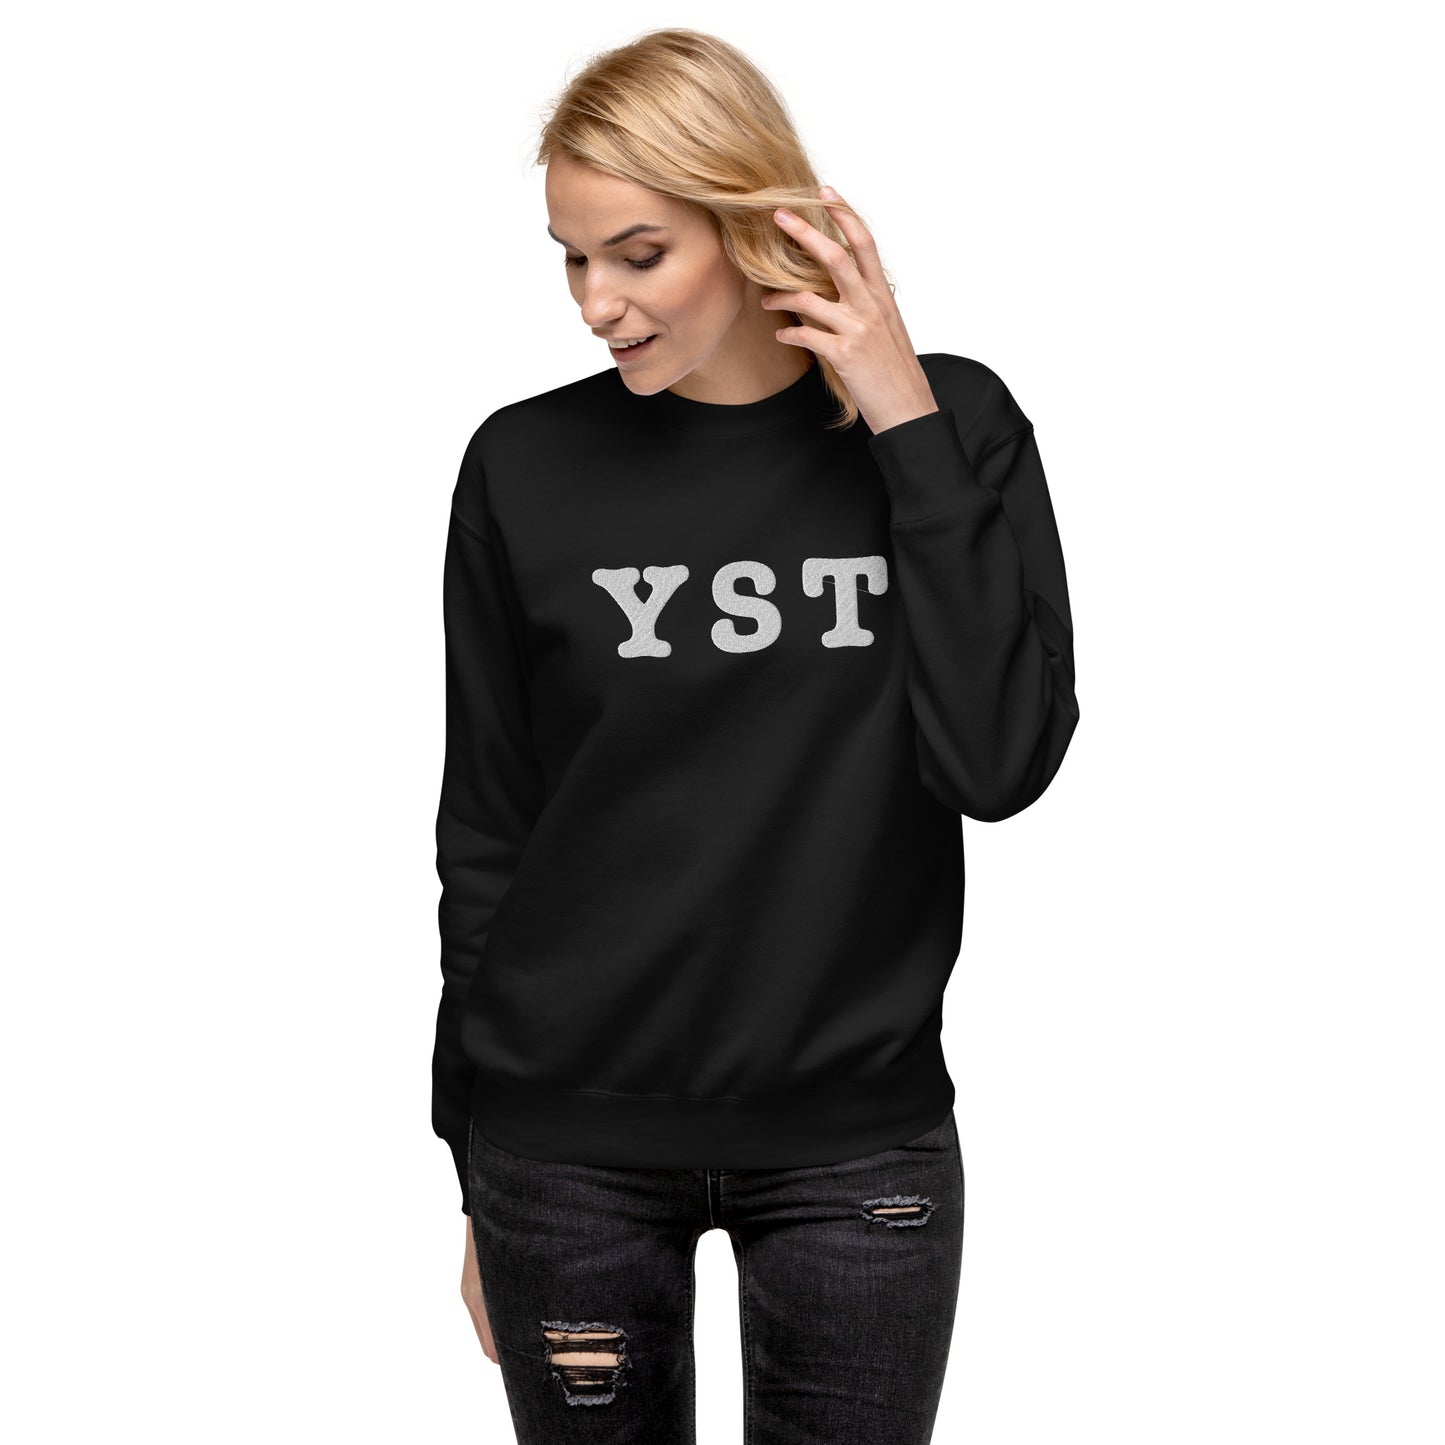 YSTAD (YST) - Premium Unisex Sweatshirt/Collegetröja med vit brodyr - 2 färger